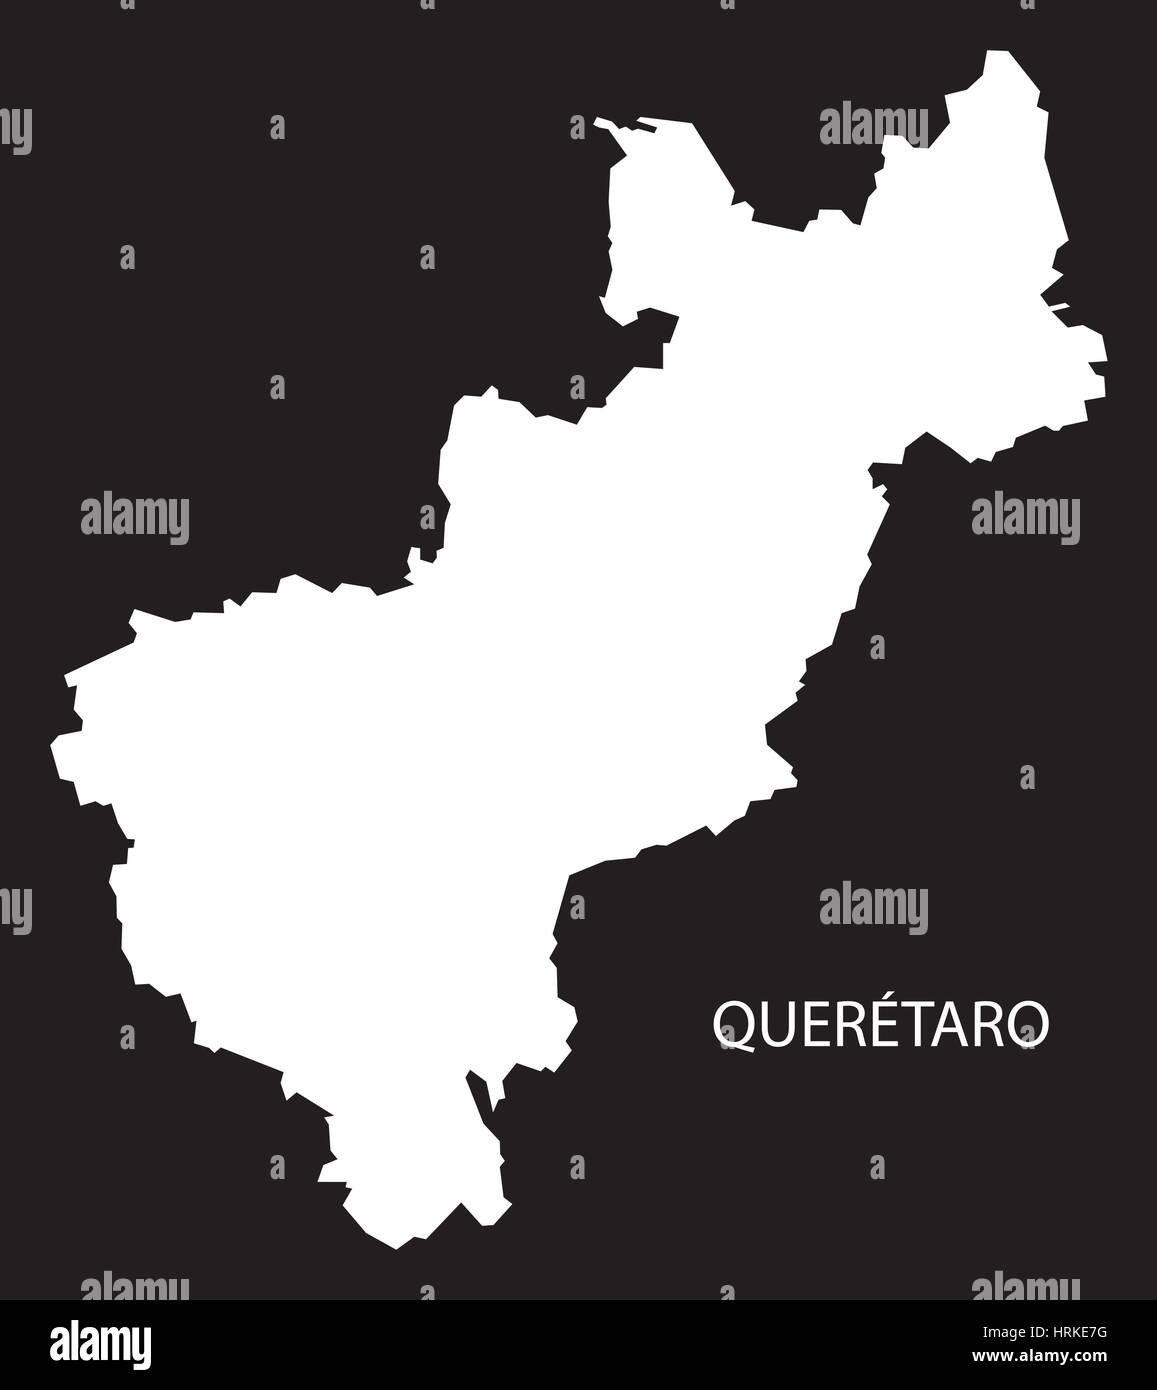 Queretaro Mexico Map schwarz invertiert silhouette Stock Vektor